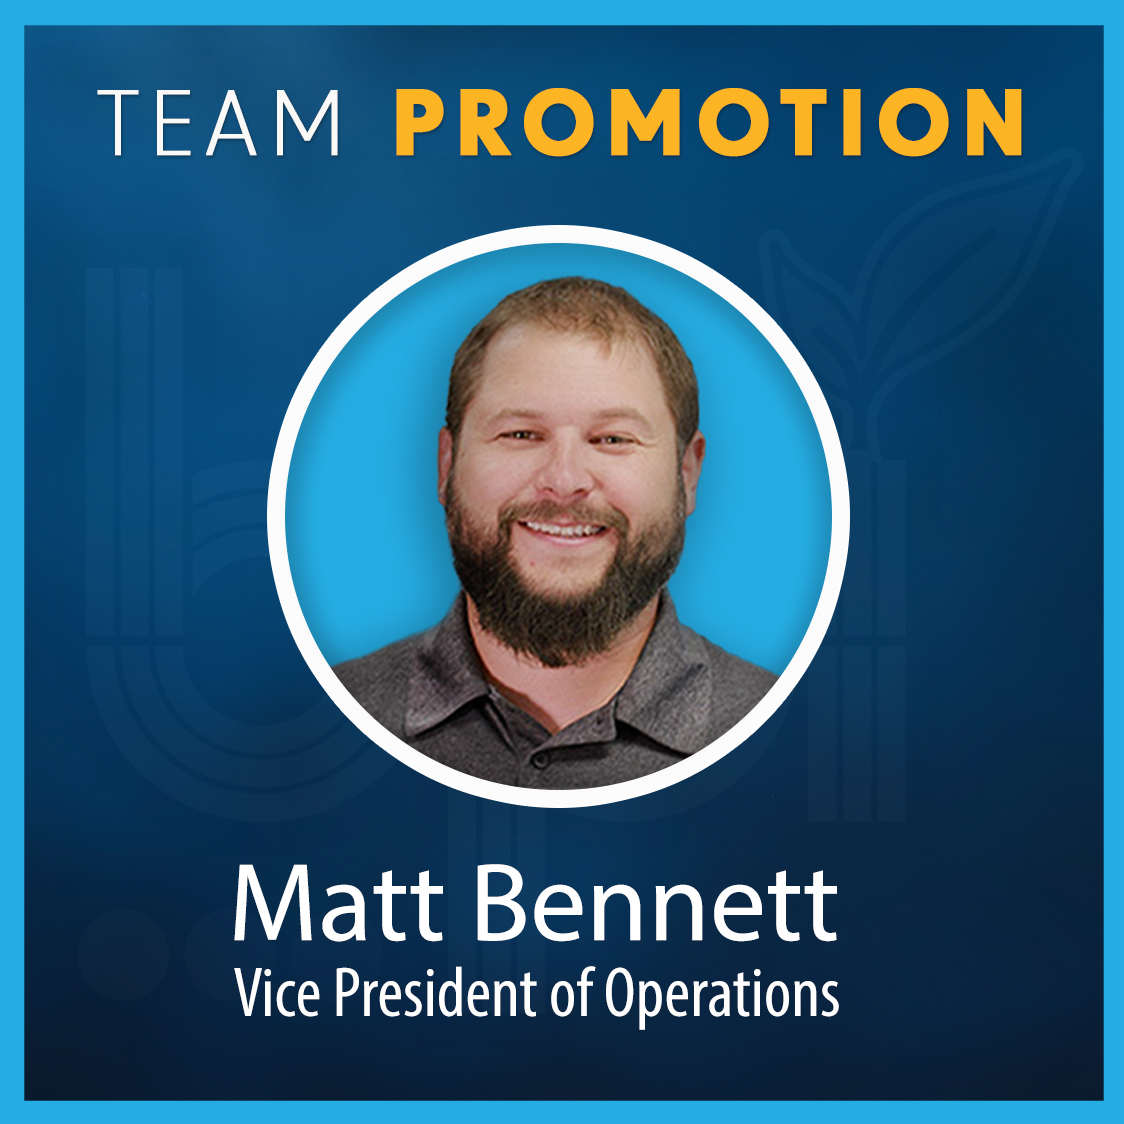 Picture of Matt Bennett on Blue Background with text stating: Team Promotion, Matt Bennett Vice President of Operations